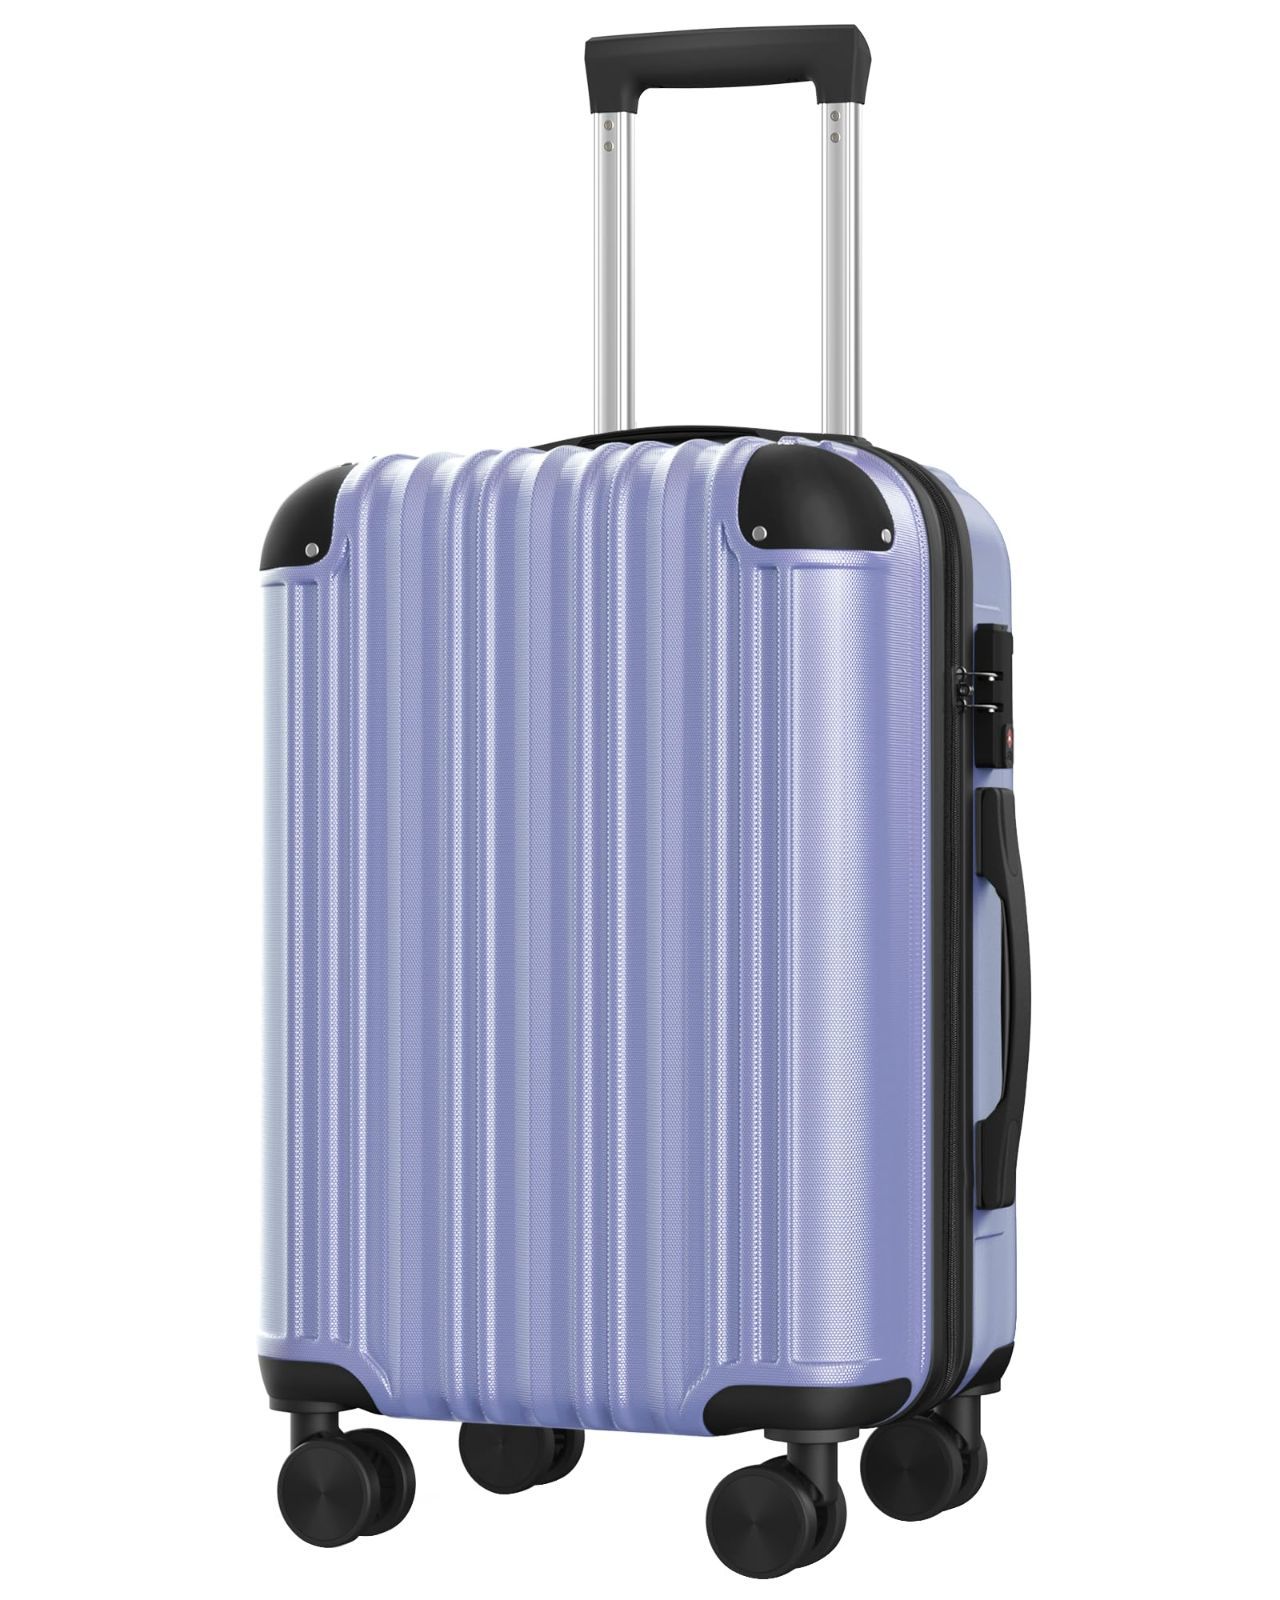 rakutora スーツケース ファスナー式 軽量 出張 旅行 機内持込 S - バッグ